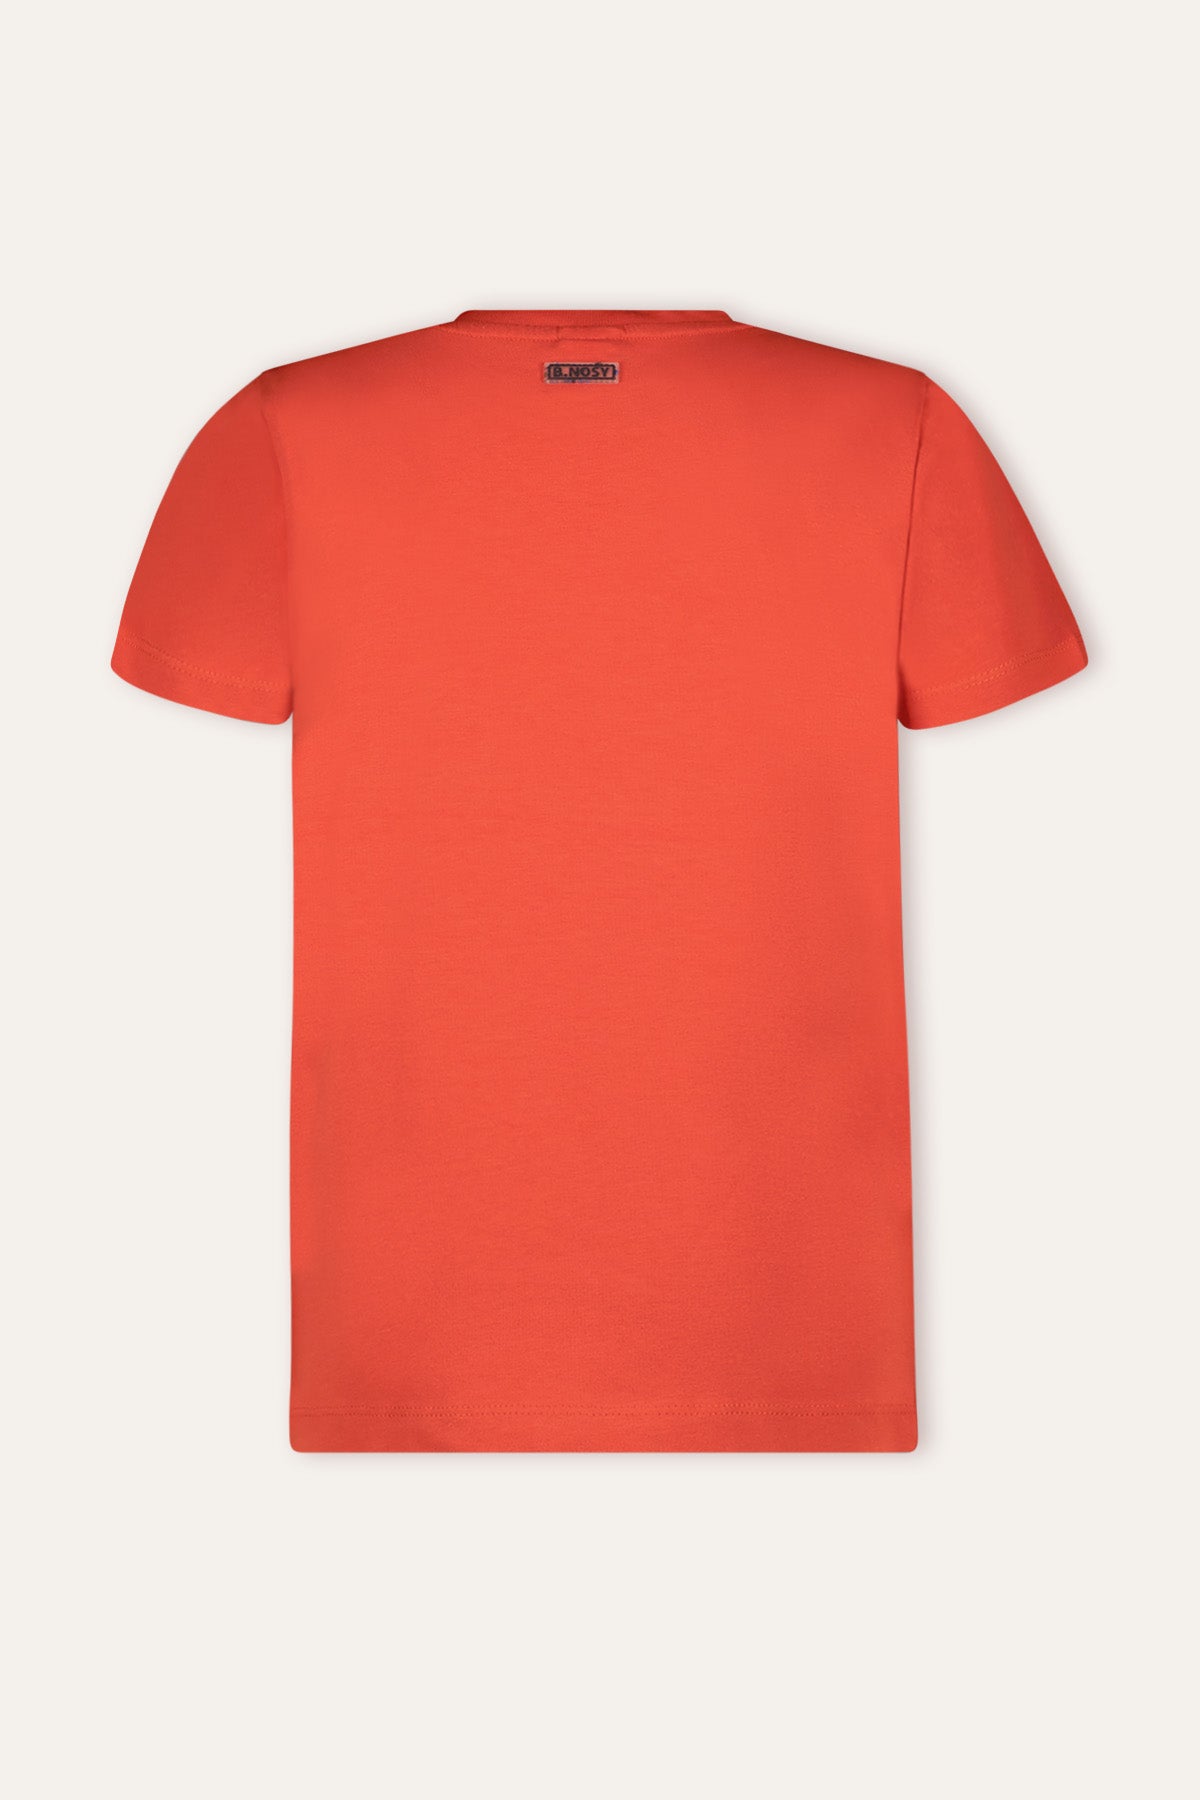 Roger Boys t-shirt rood